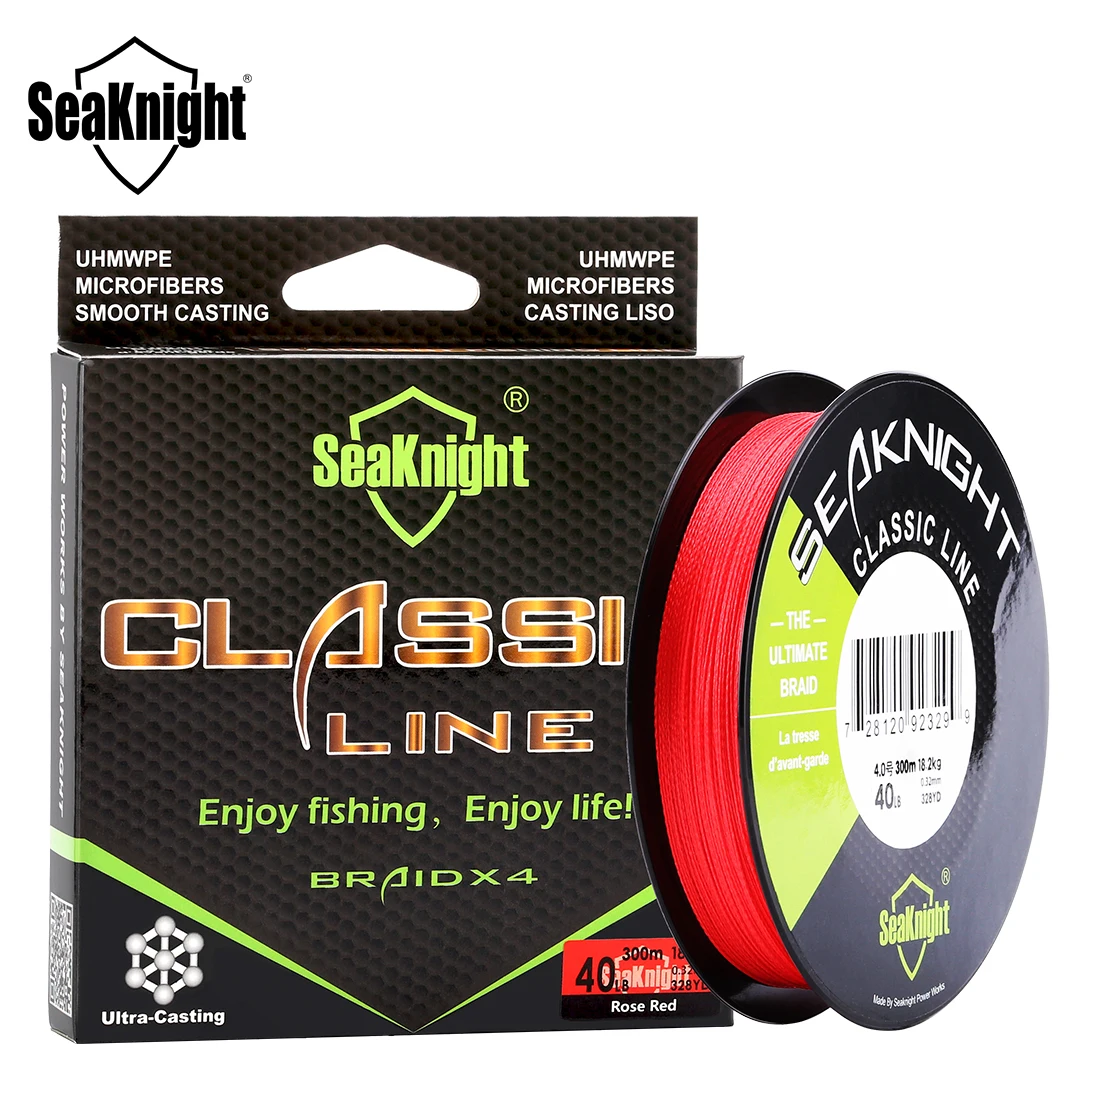 SALE! SeaKnight Brand CLASSIC 300M Fishing Line, 4 Strands Braided